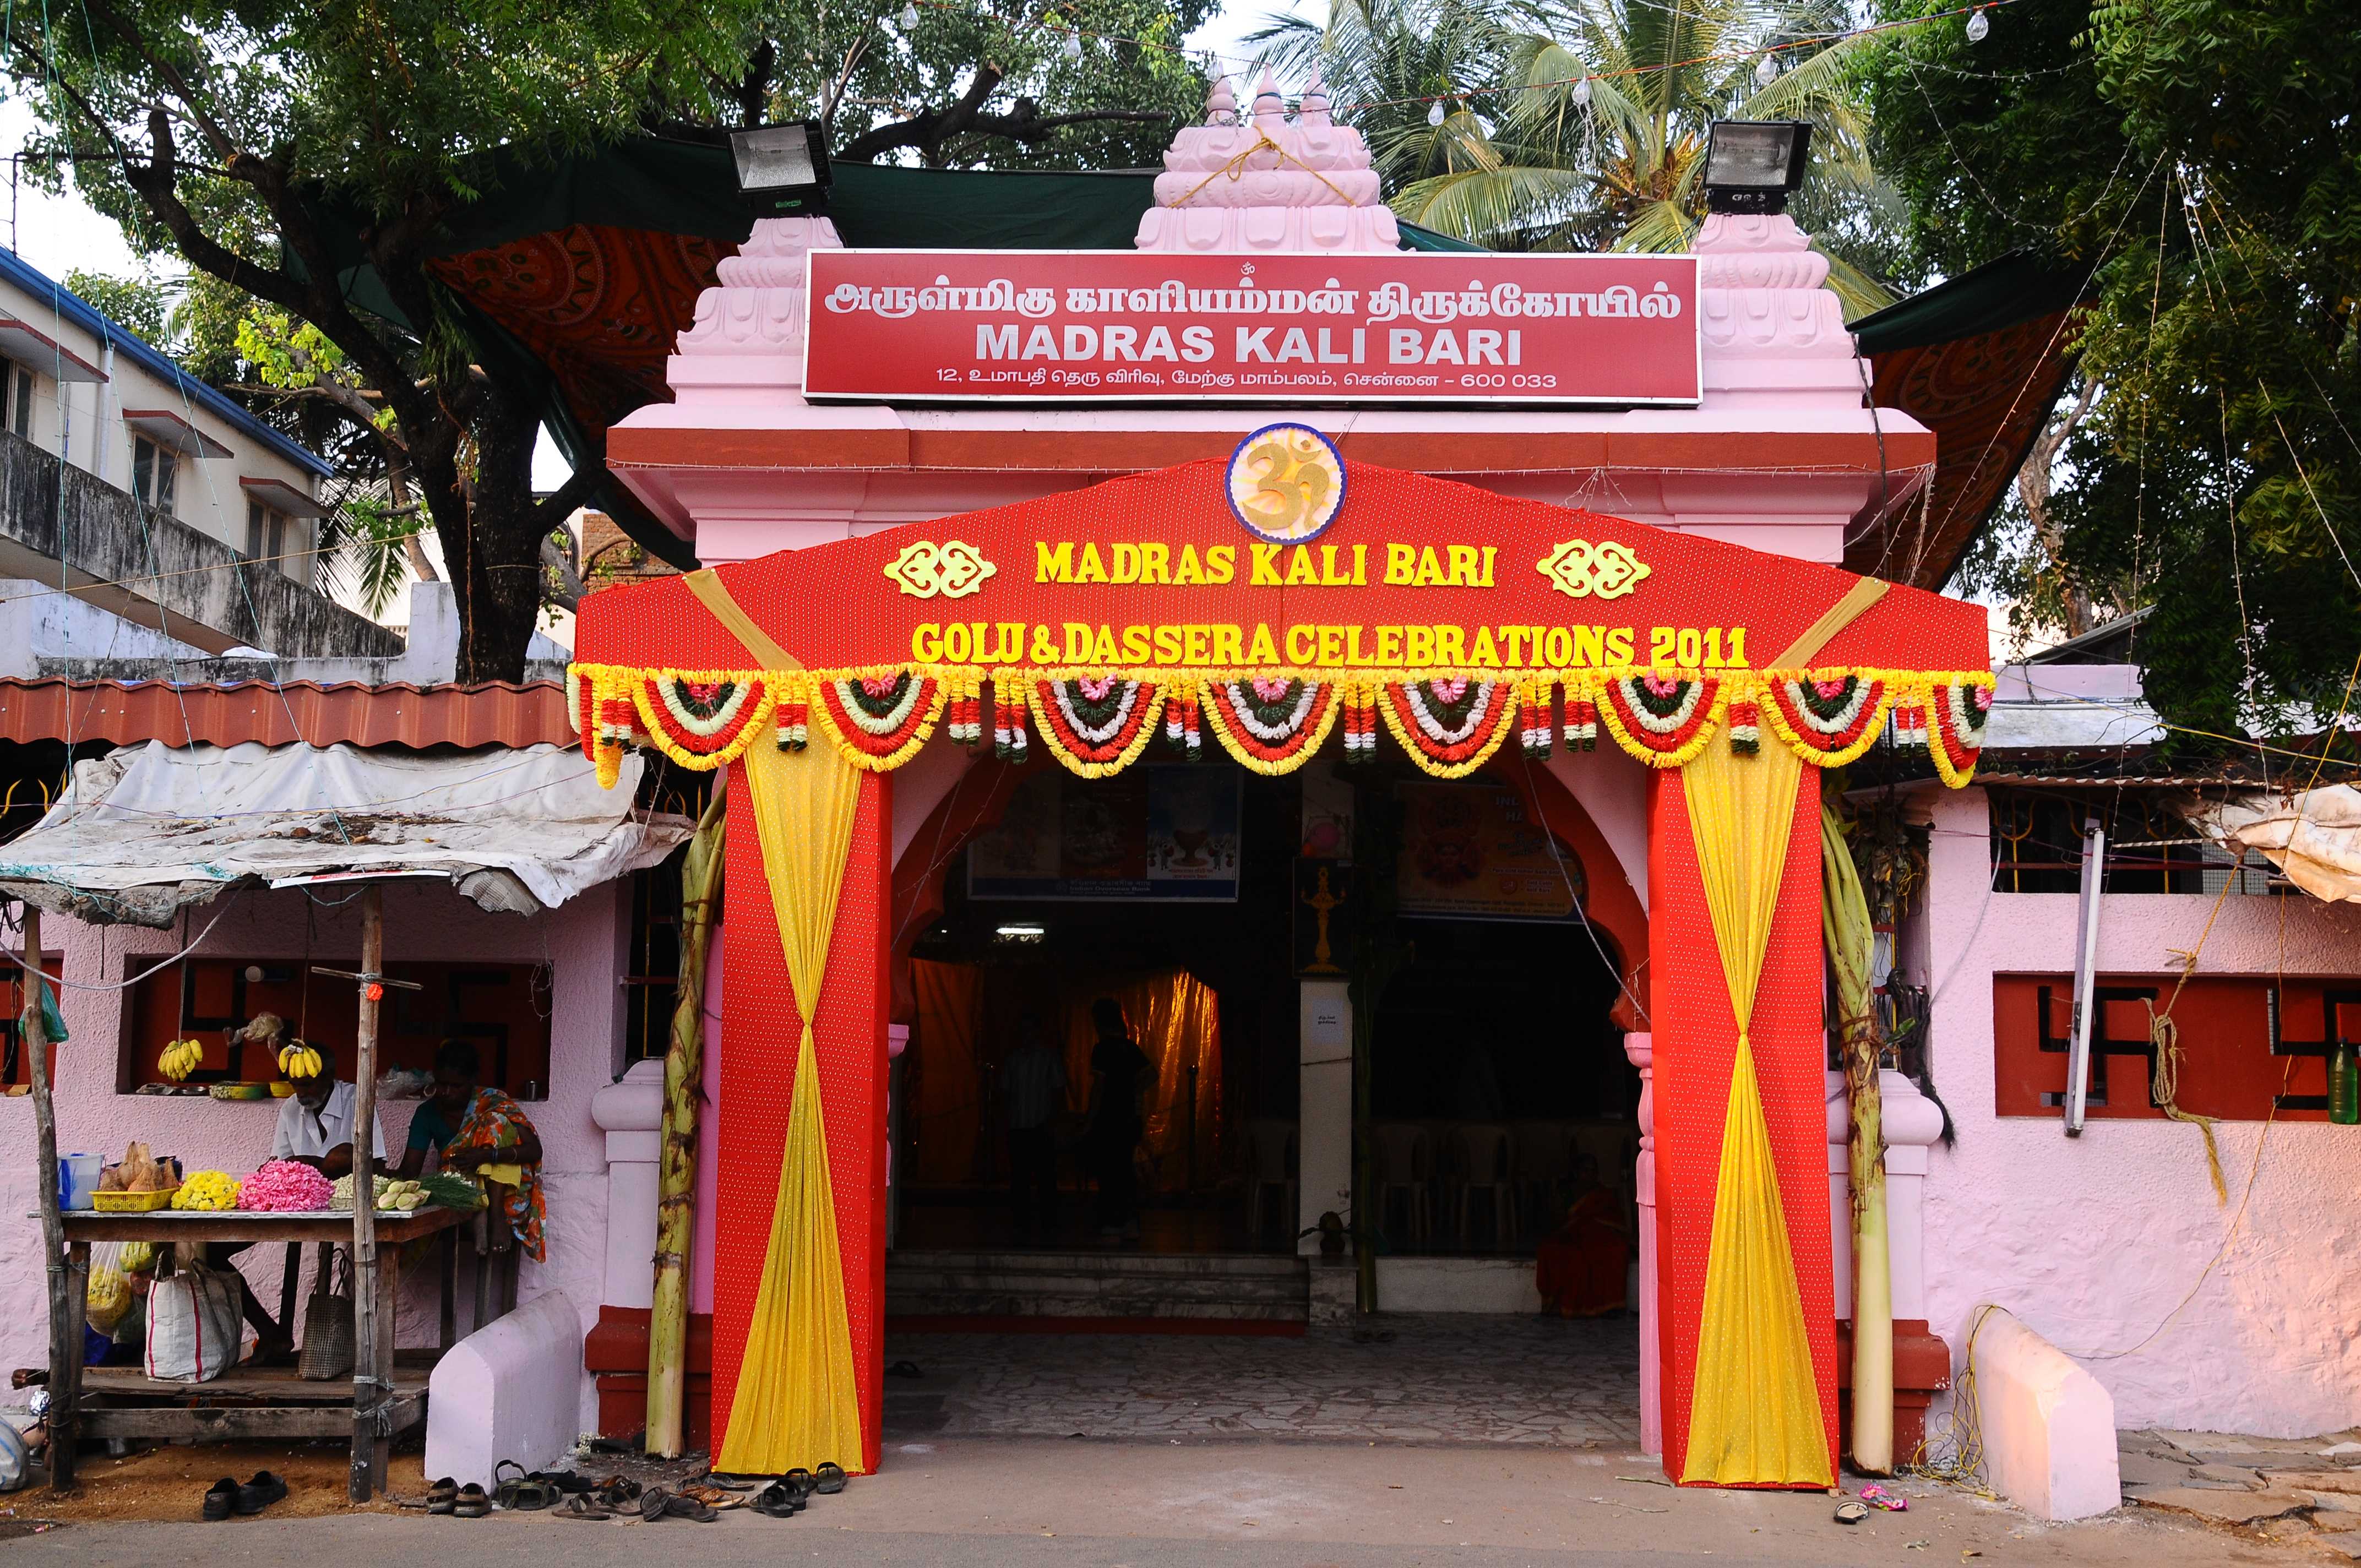 Madras kali bari temple